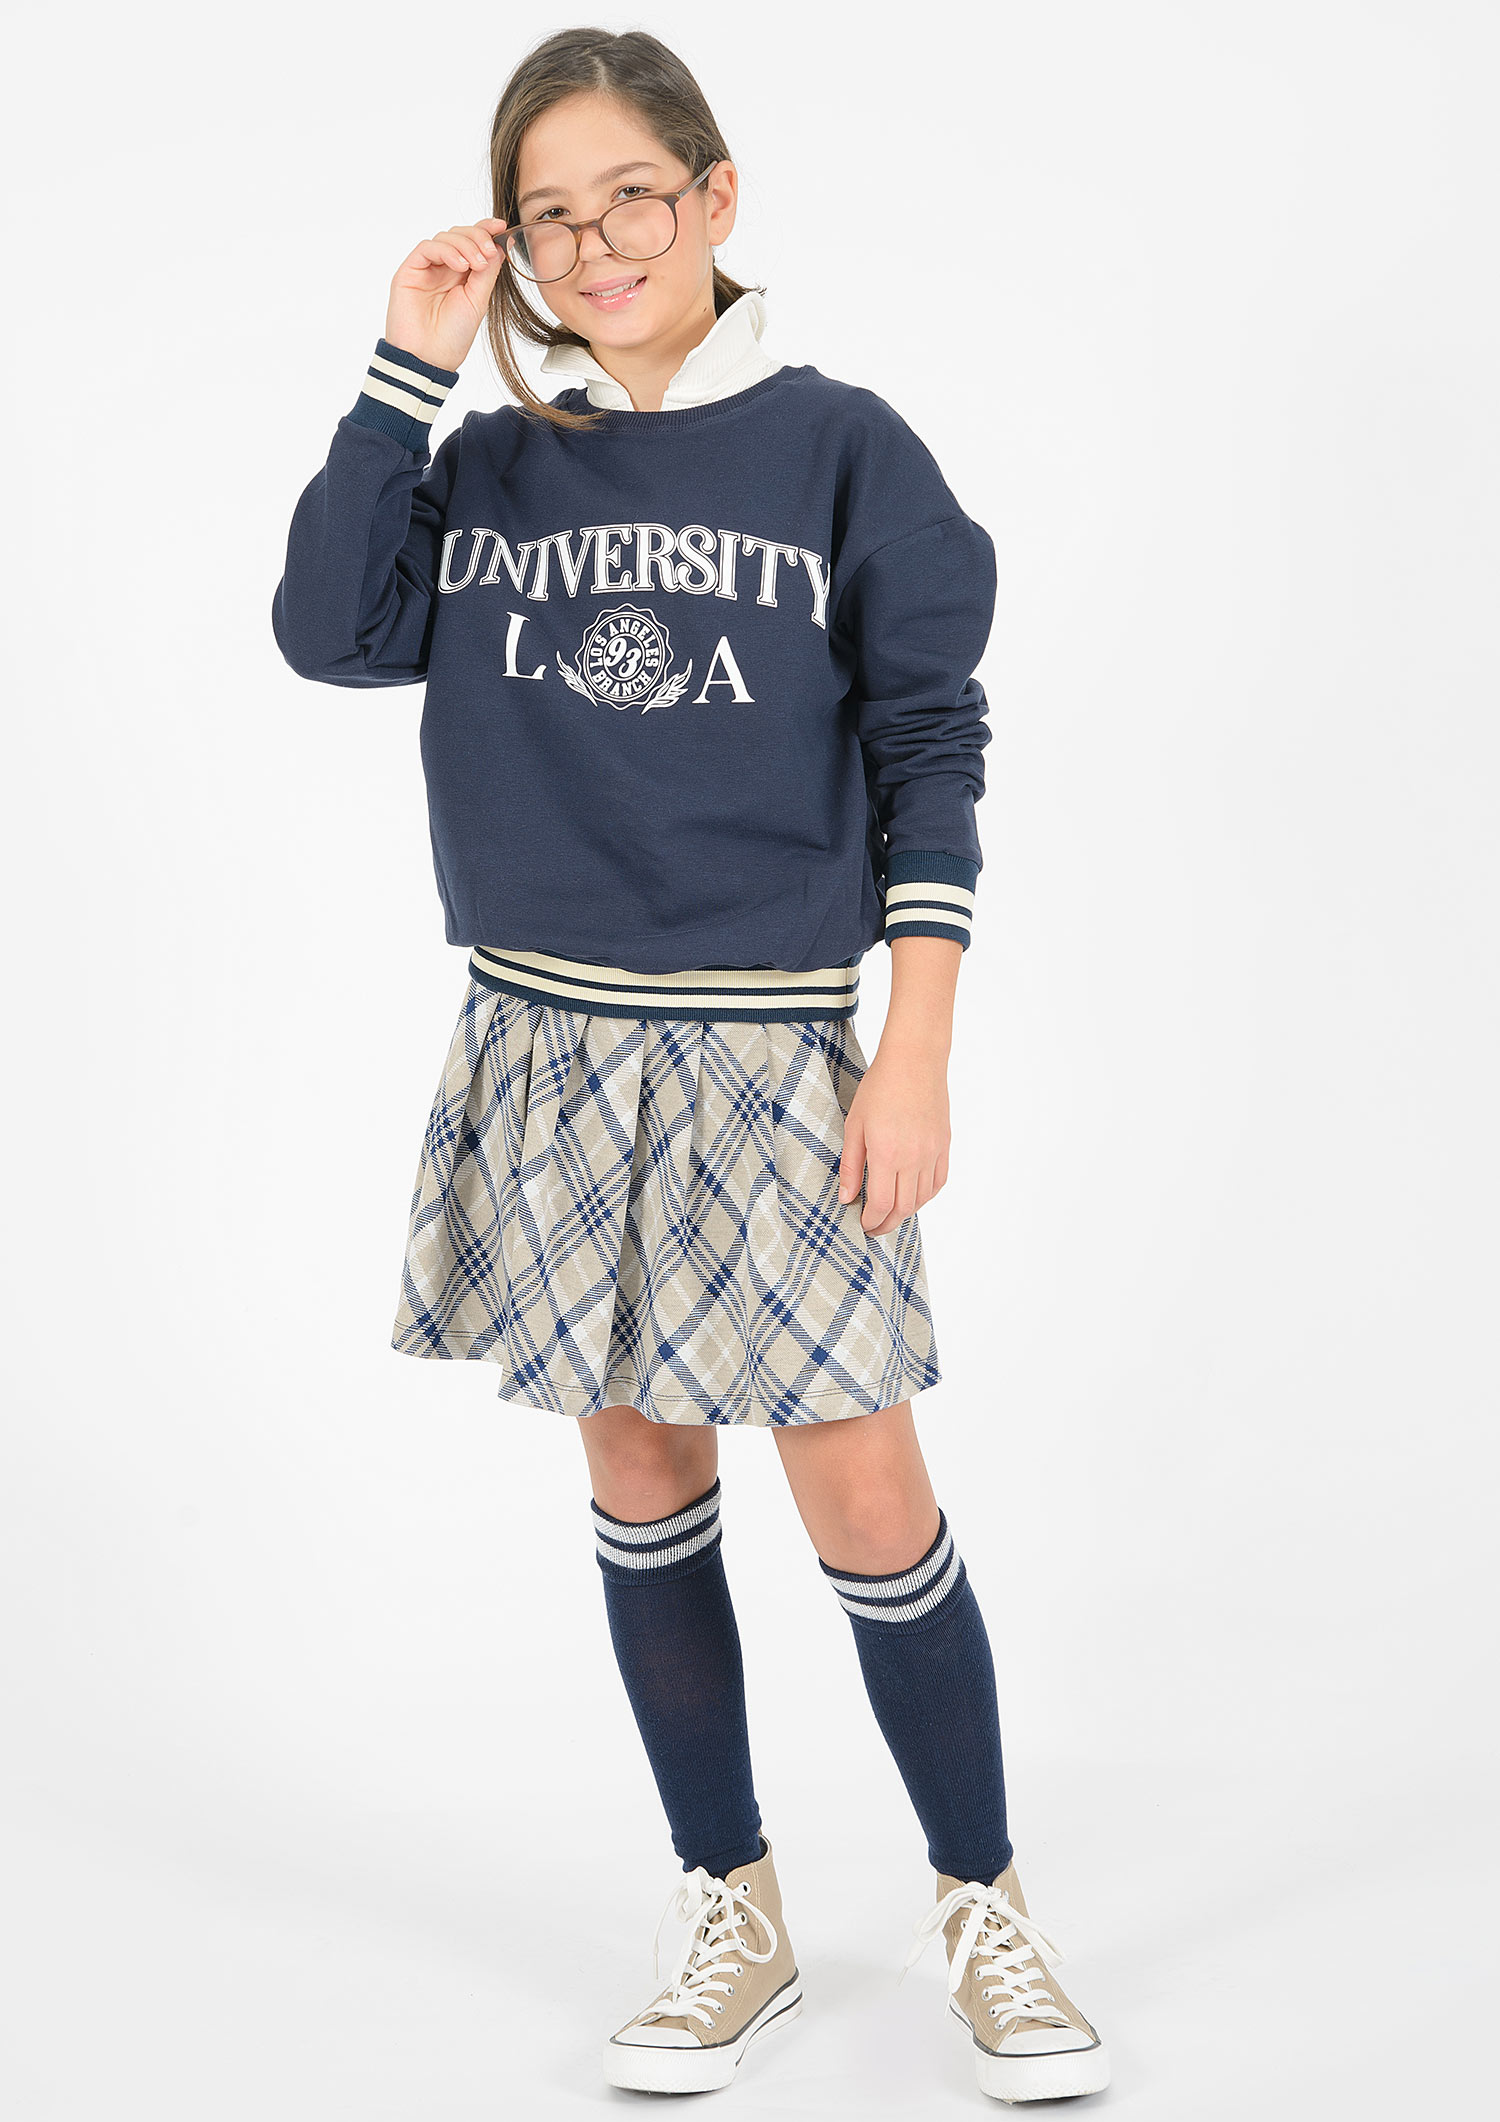 5887-JRNY Girls Sweatshirt -University